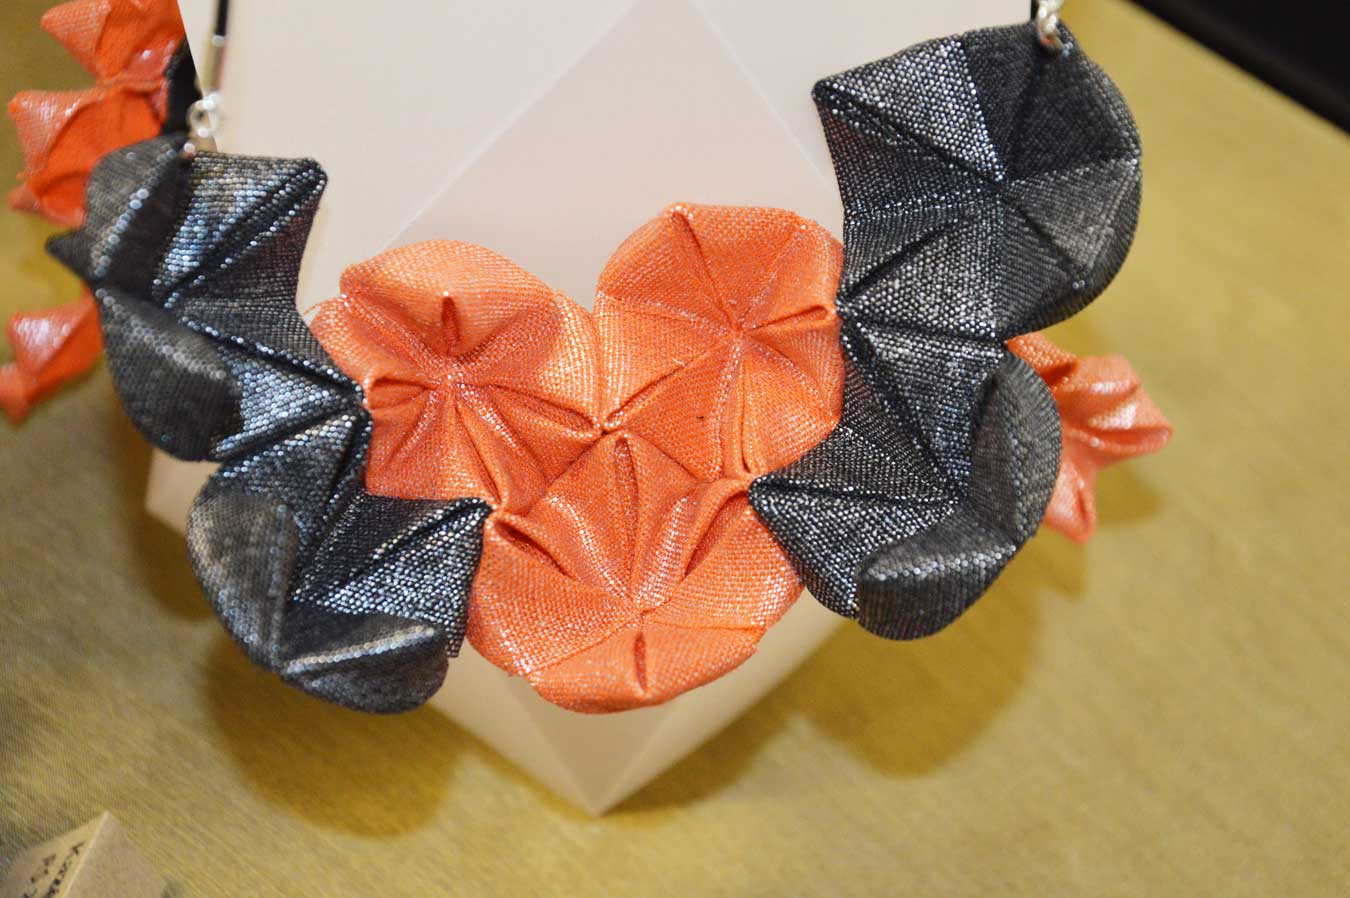 Colar arte Orinuno(origami em tecido) Thais Kato. Foto: Luci Judice Yizima